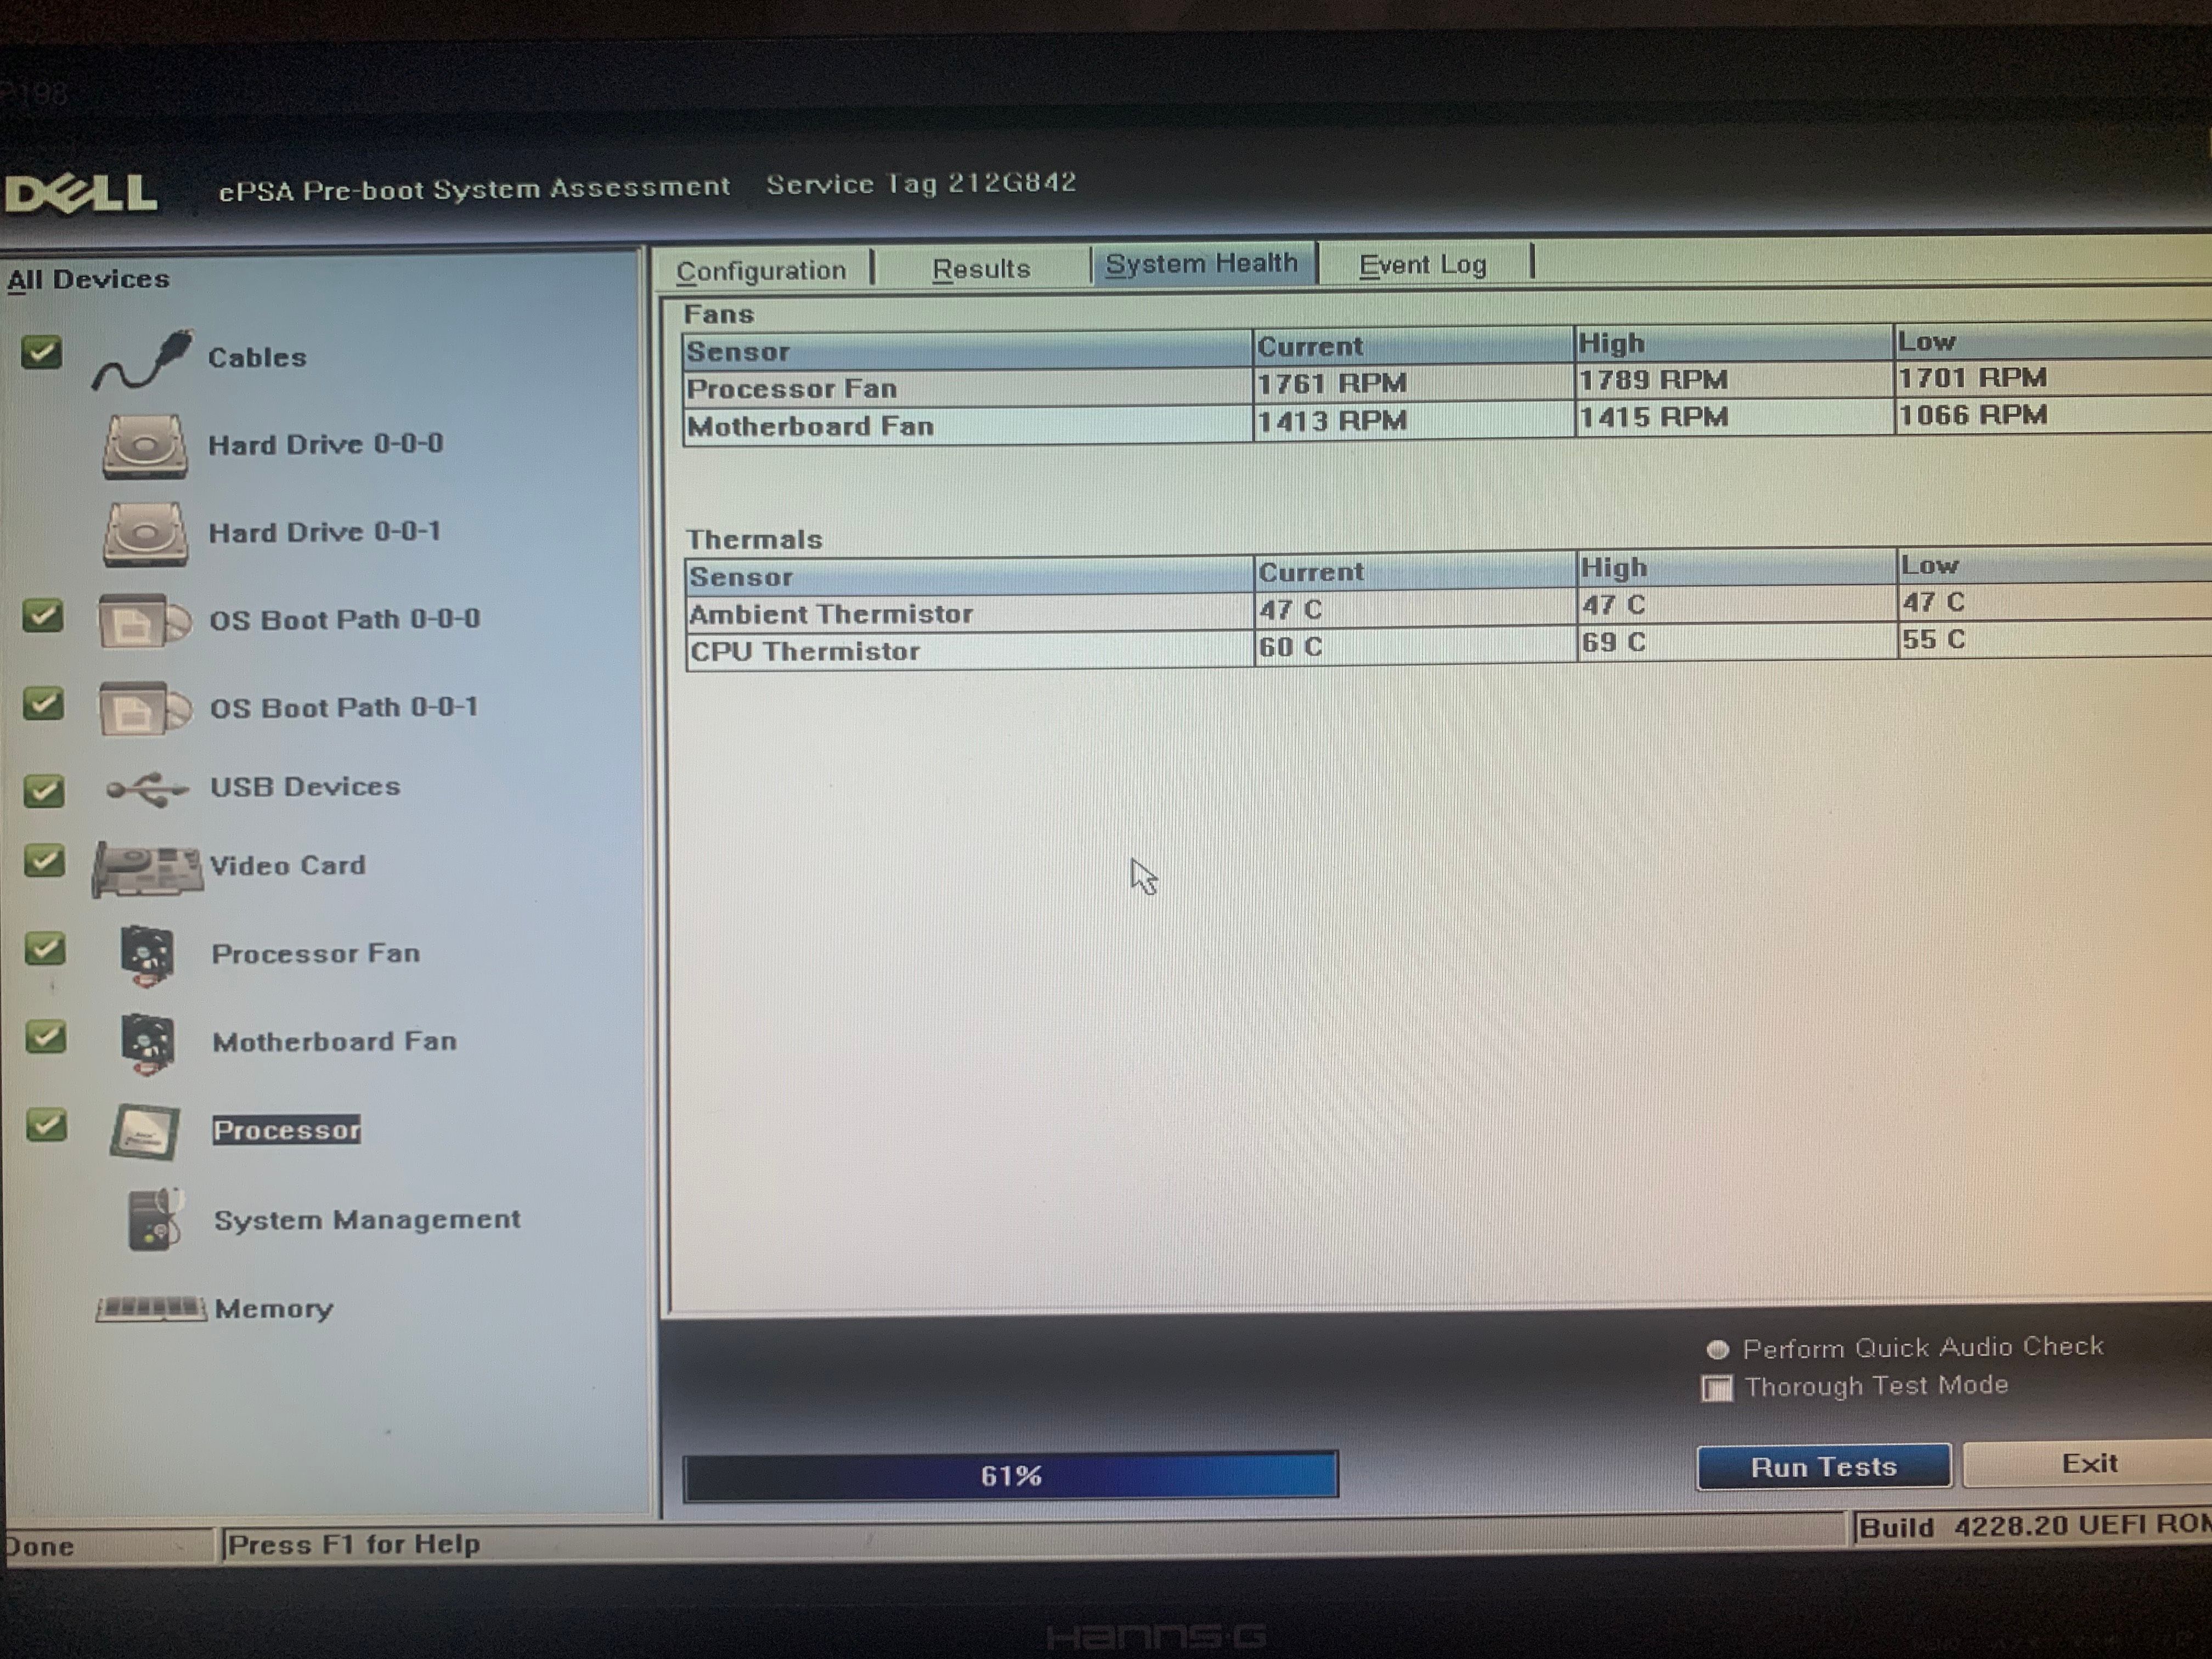 Running a Diagnostics Test in BIOS on a Windows Laptop